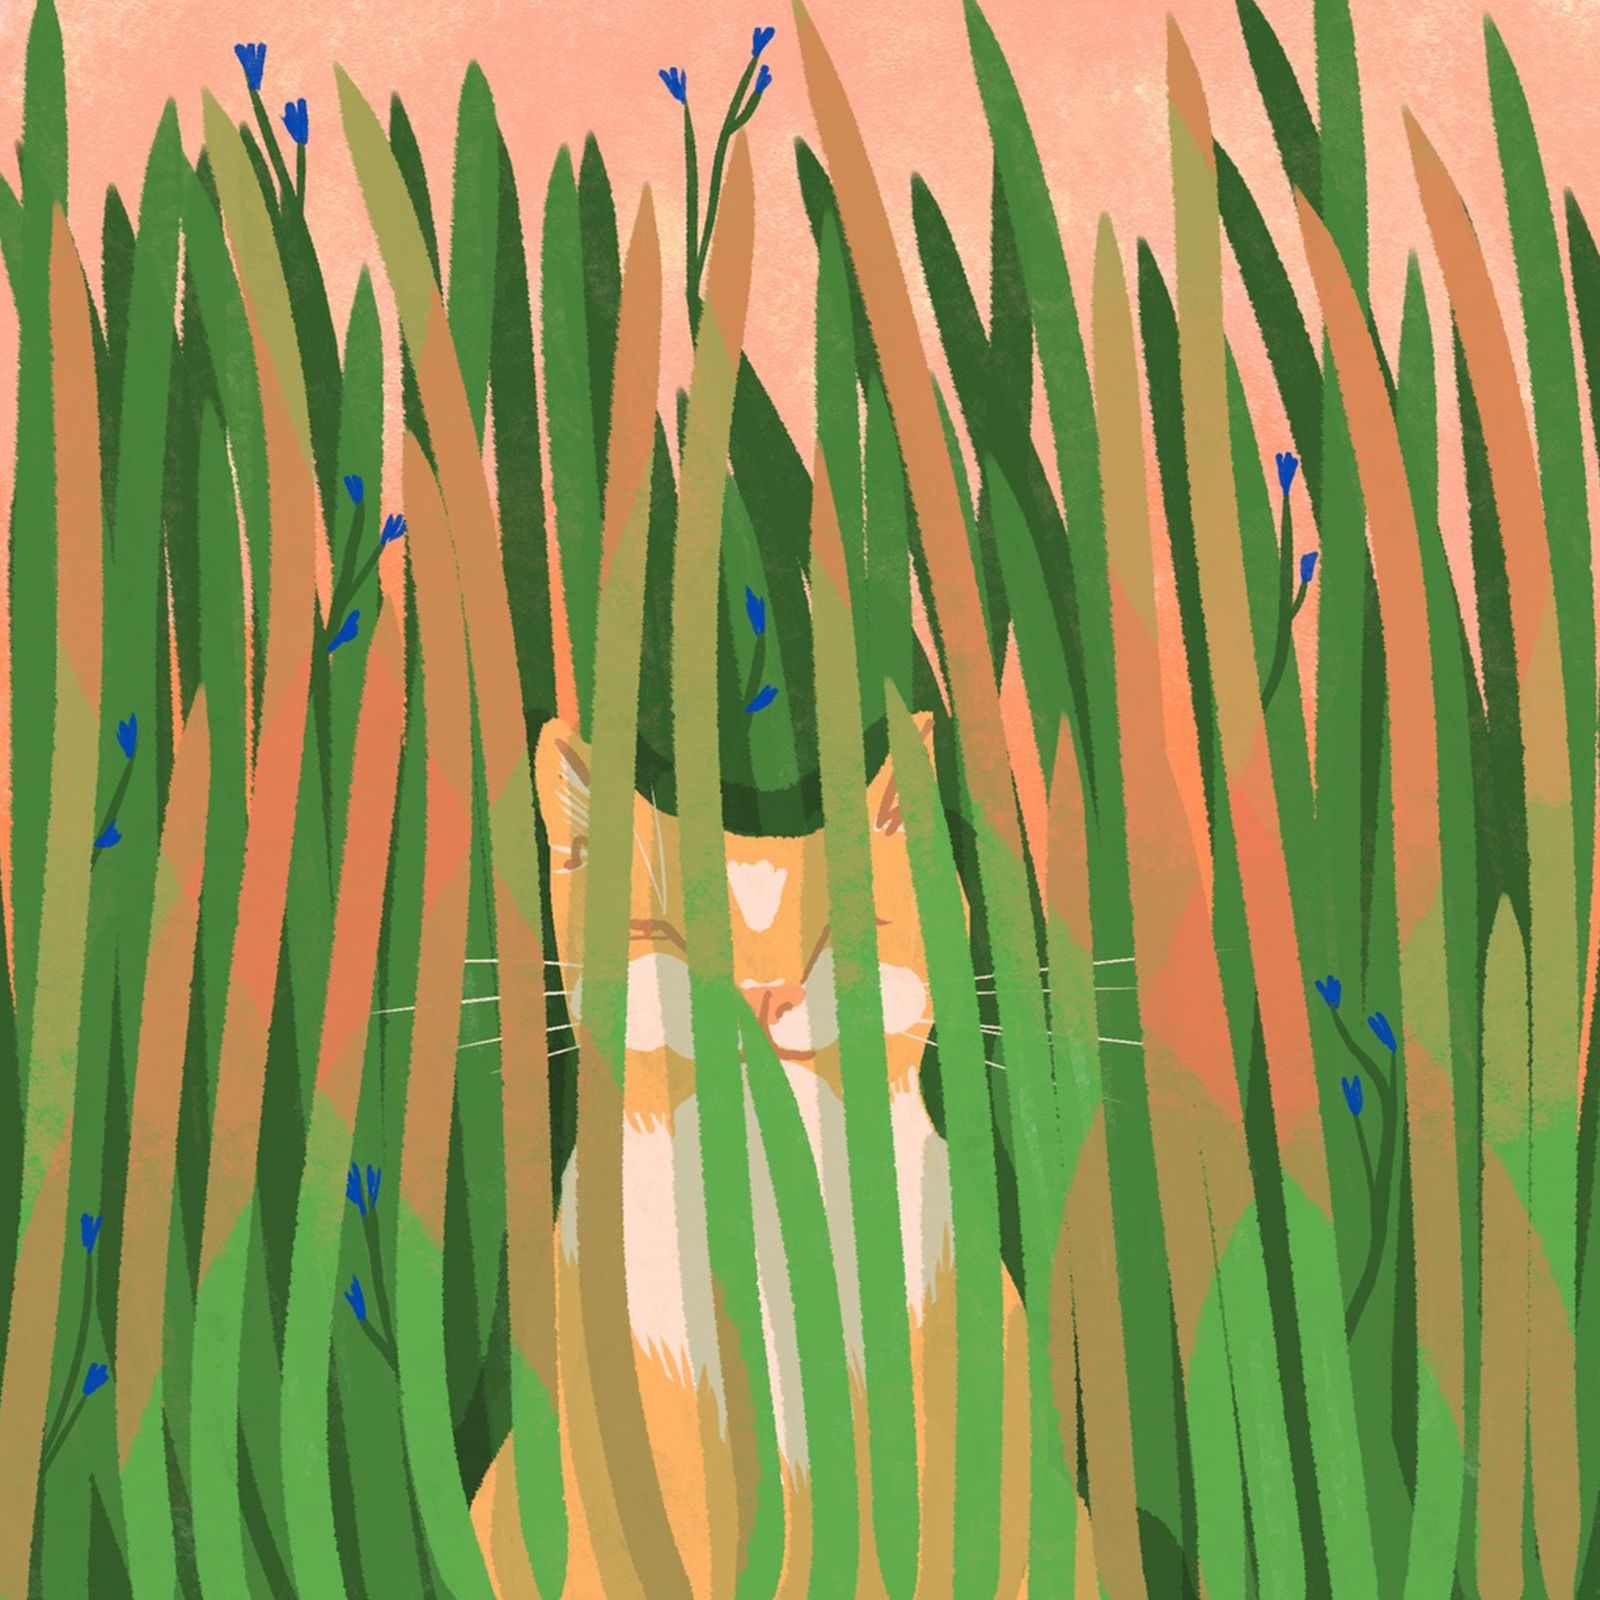 Momo in the grass cat illustration ipad procreate